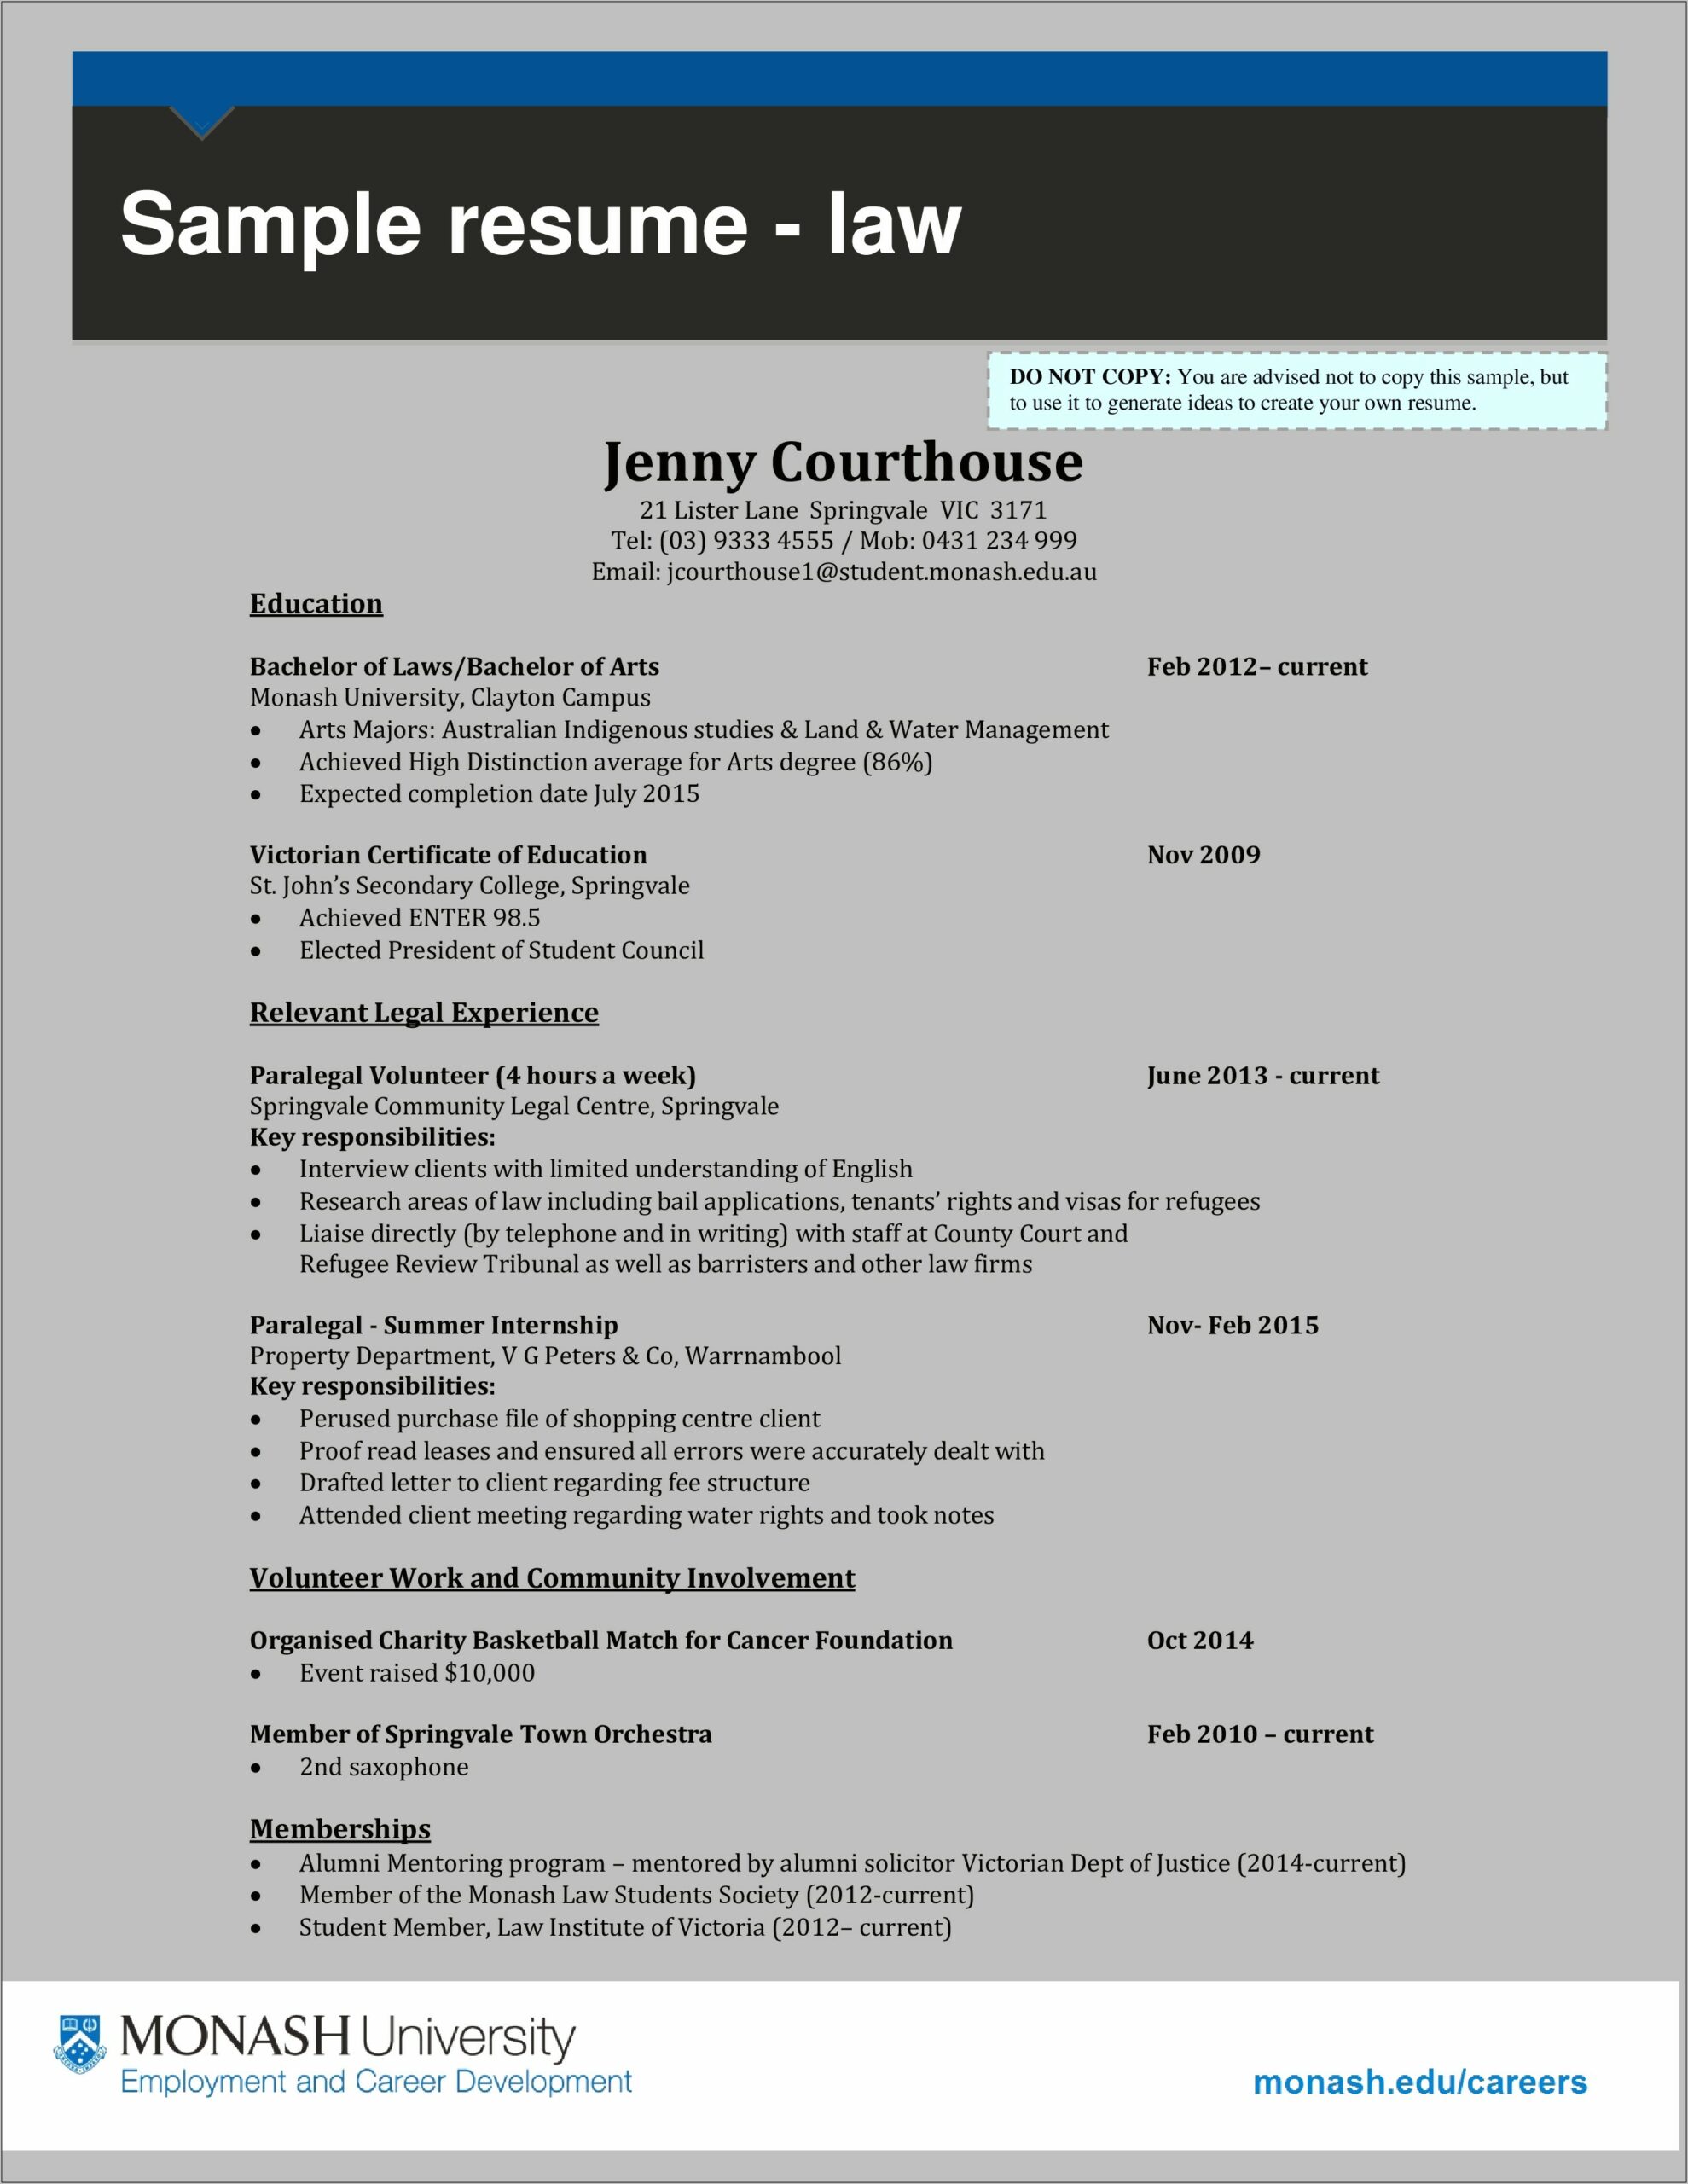 Sample Resume For Certified Legal Intern Program Legal